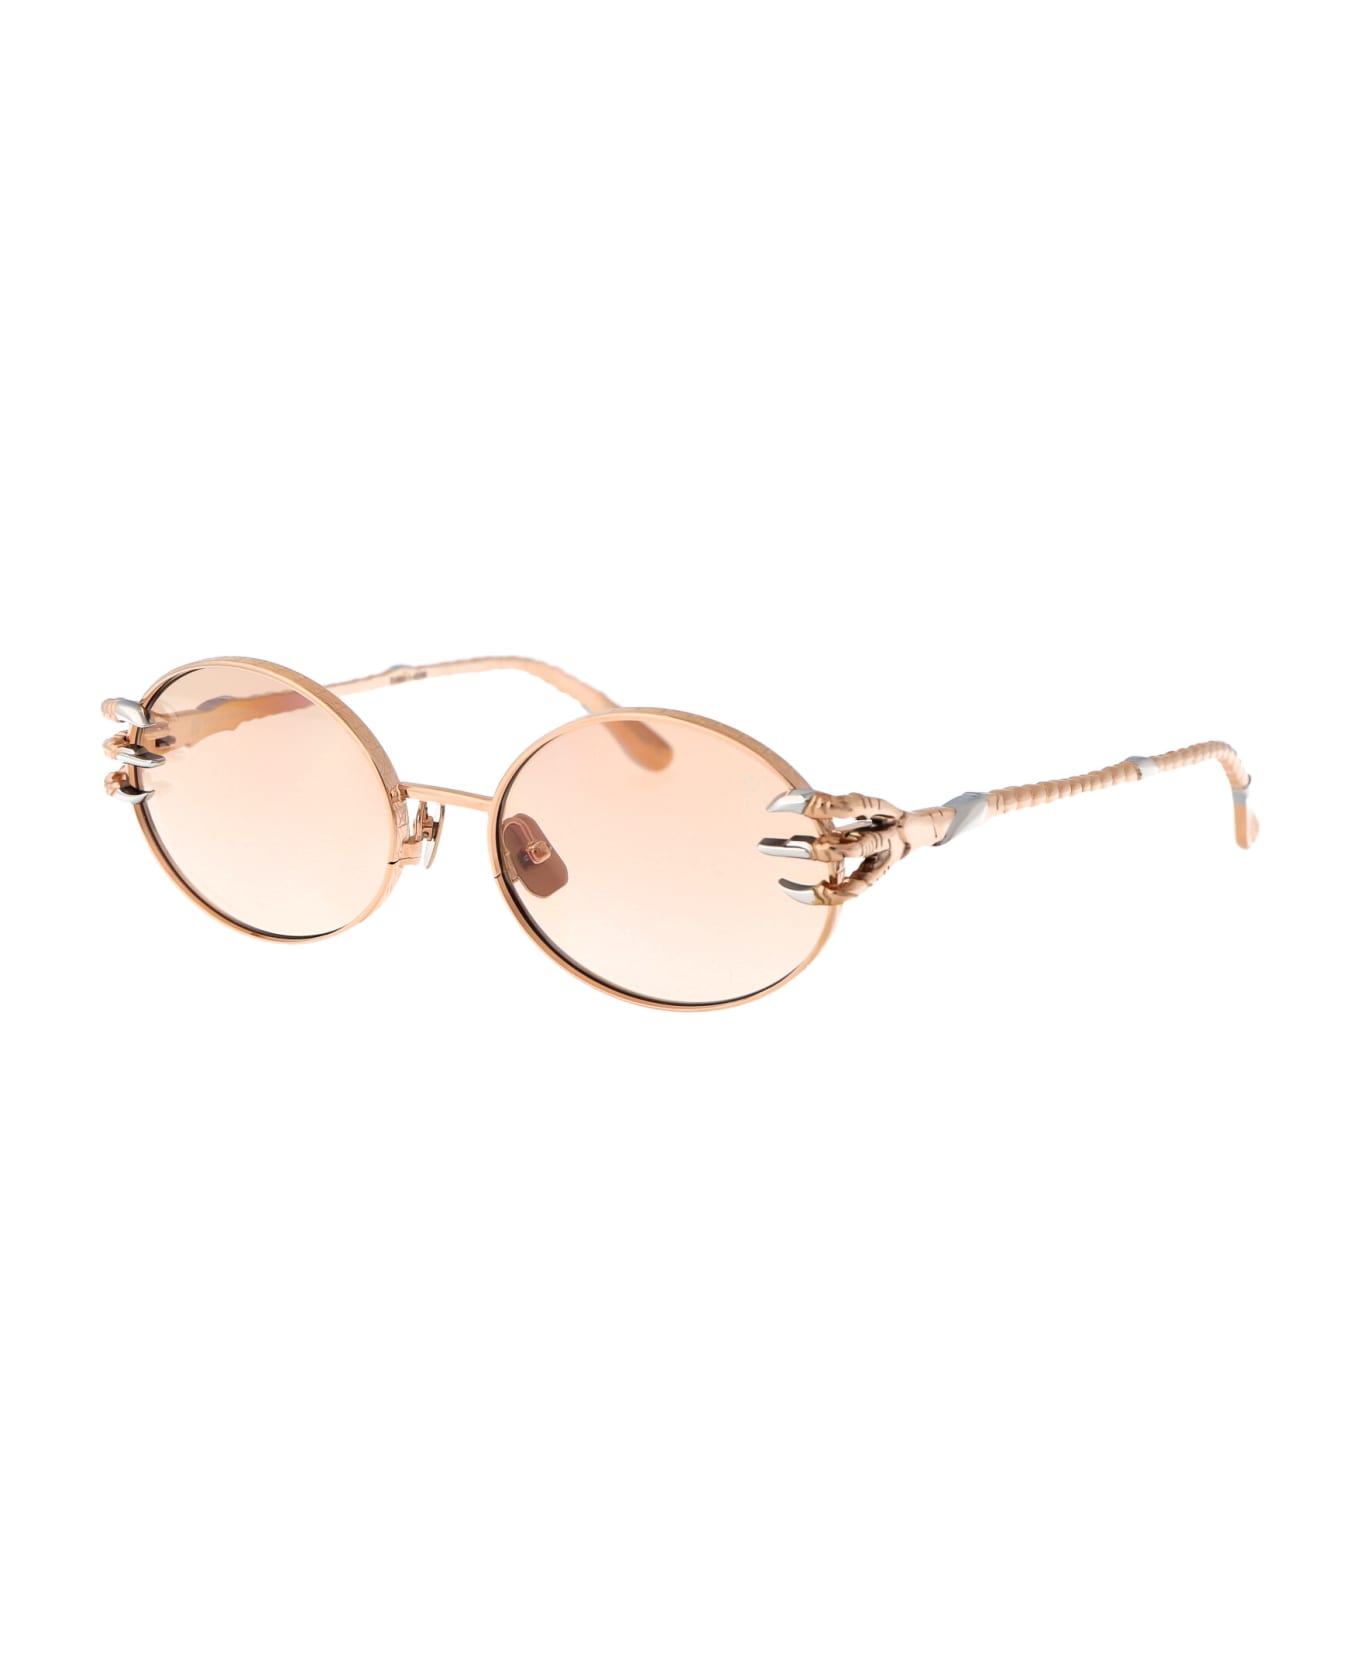 Anna-Karin Karlsson Claw Aventure Sunglasses - ROSE GOLD